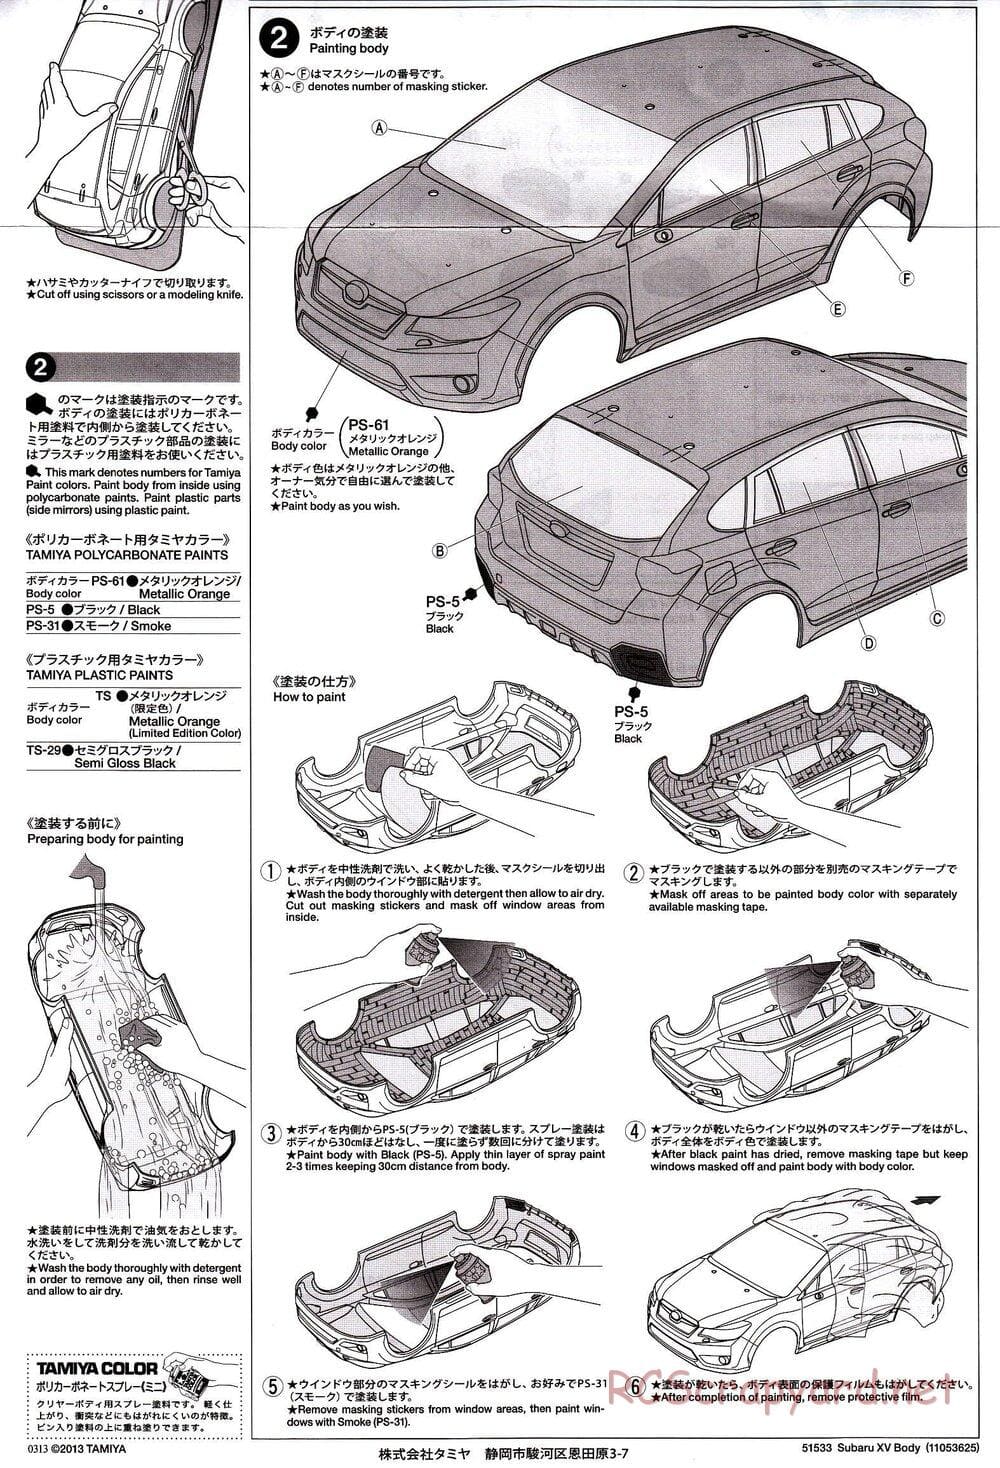 Tamiya - Subaru XV - TT-02 Chassis - Body Manual - Page 2